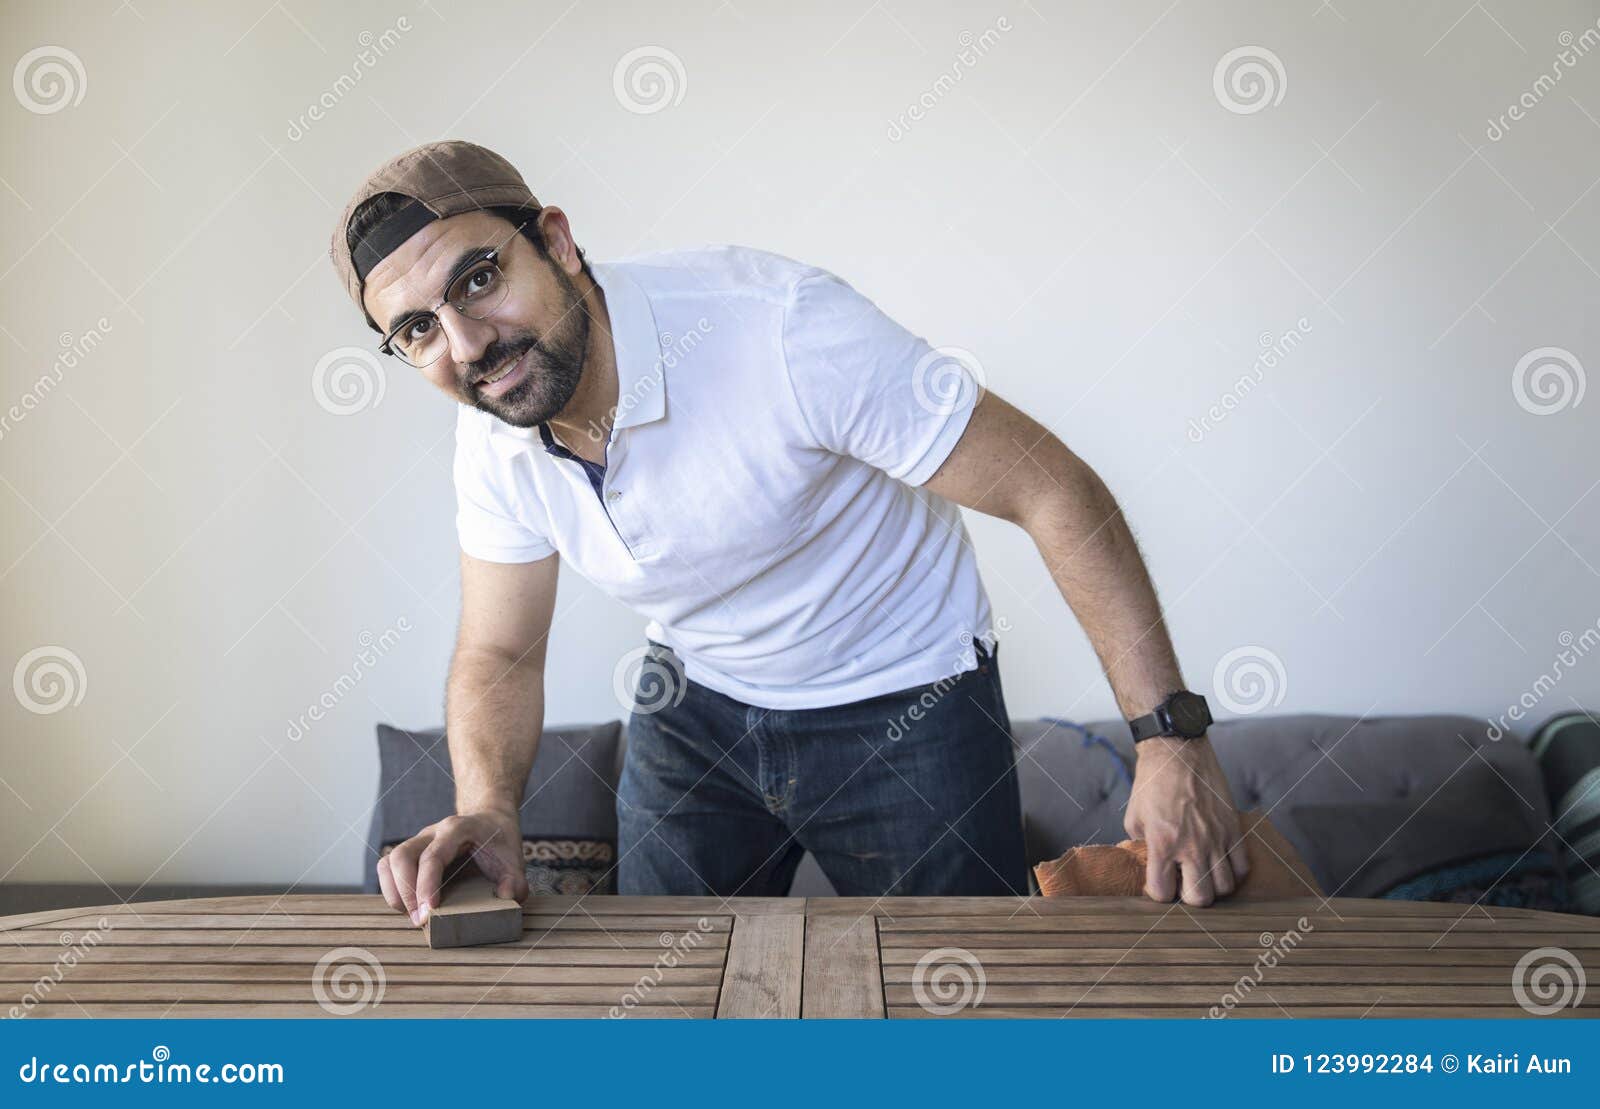 Arab Man Renovating A Wooden Table Stock Photo Image Of